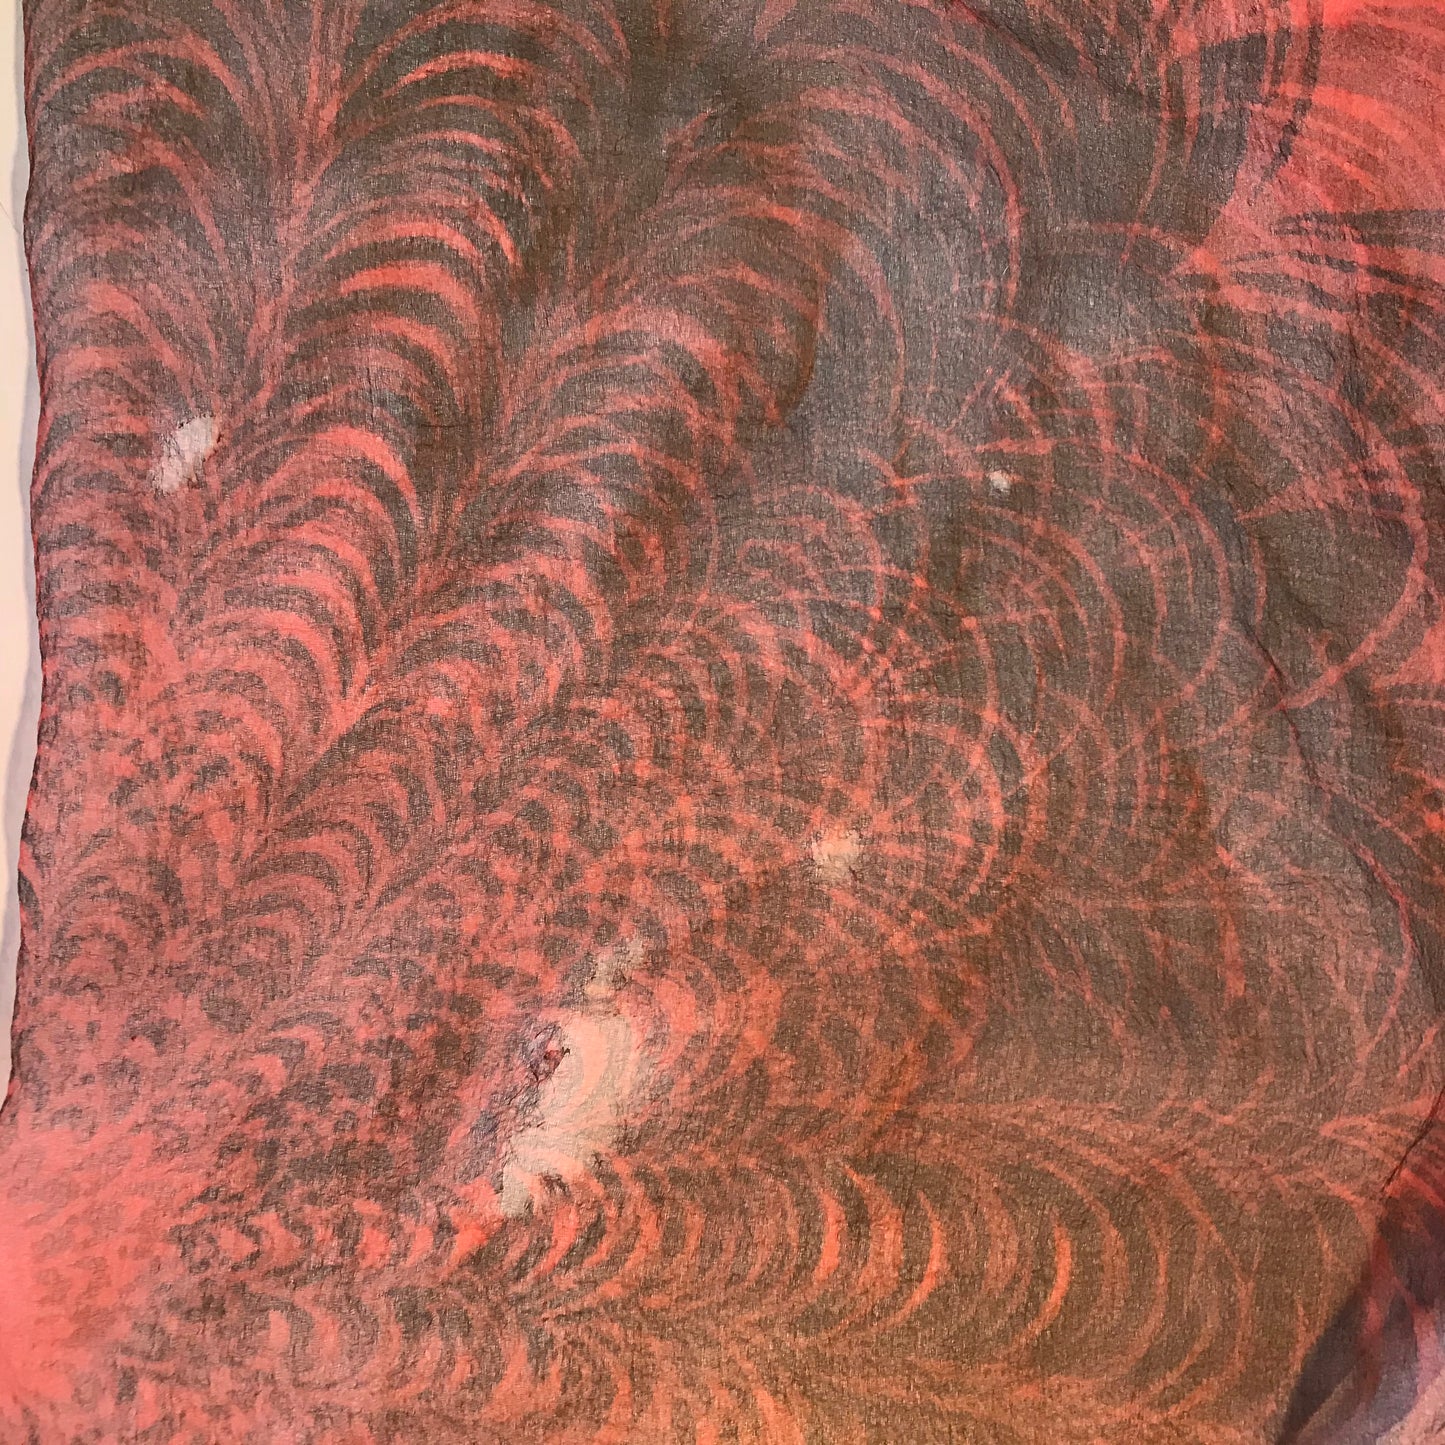 Red and Black Swirled Print Chiffon Scarf circa 1960s